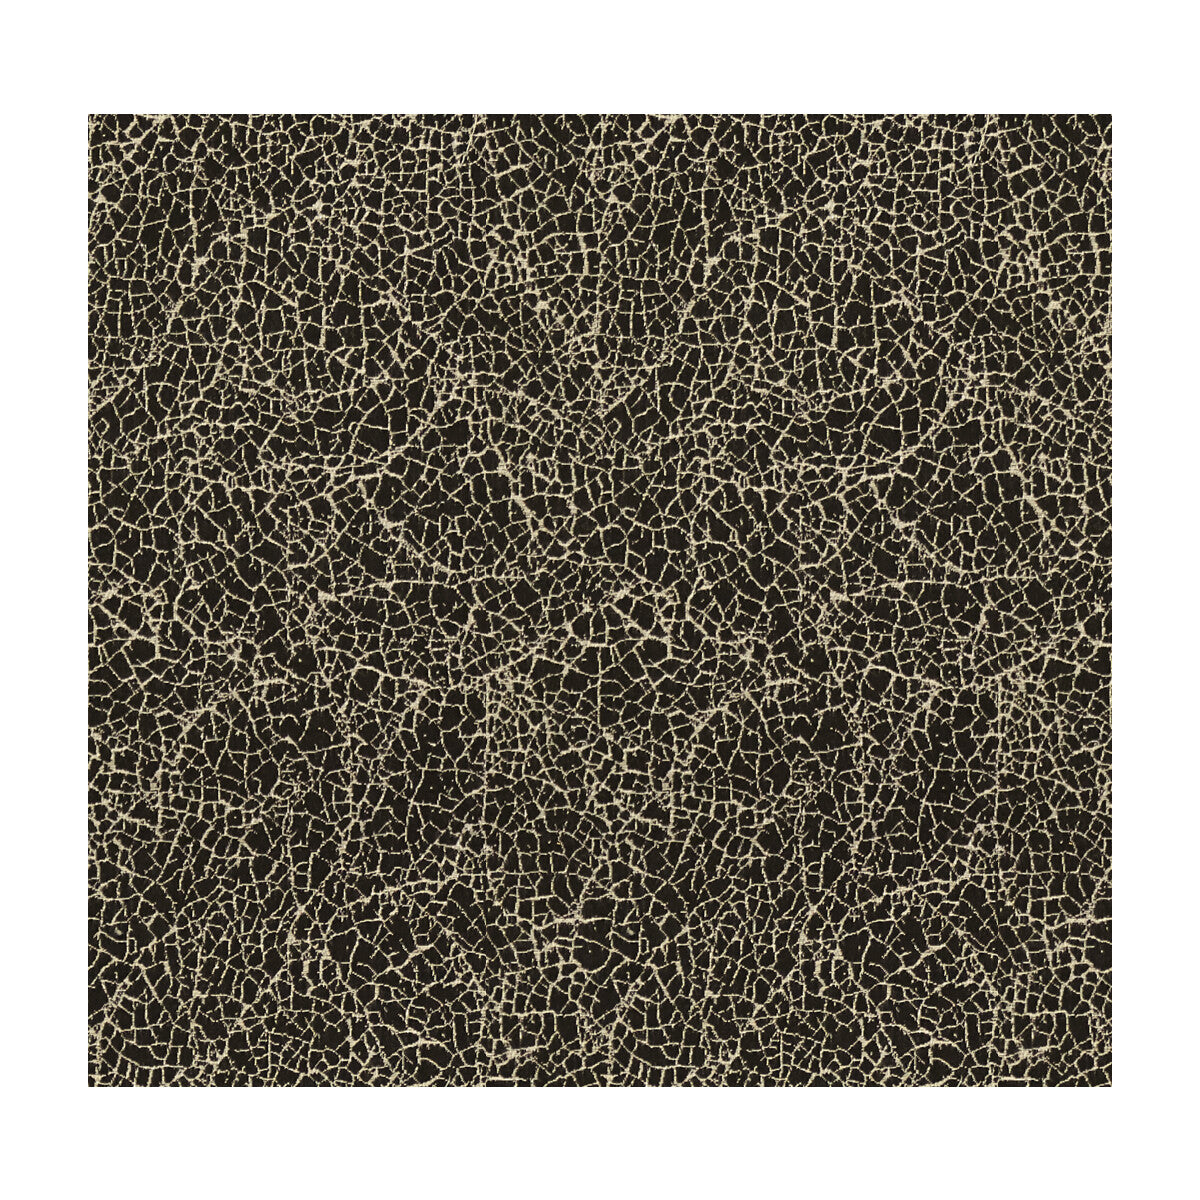 Breakwater fabric in black color - pattern GWF-3419.8.0 - by Lee Jofa Modern in the Kelly Wearstler Terra Firma Textiles collection